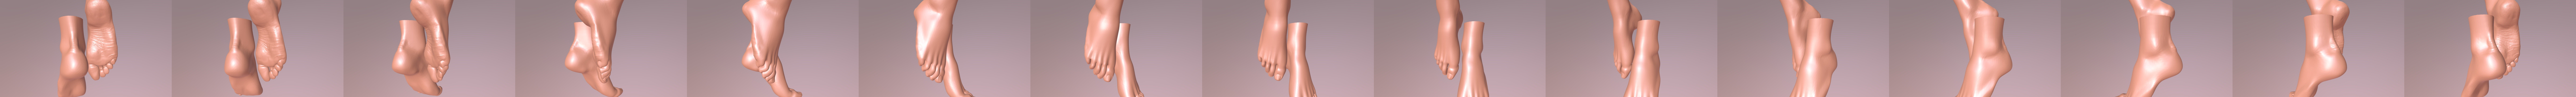 Sexy feet models